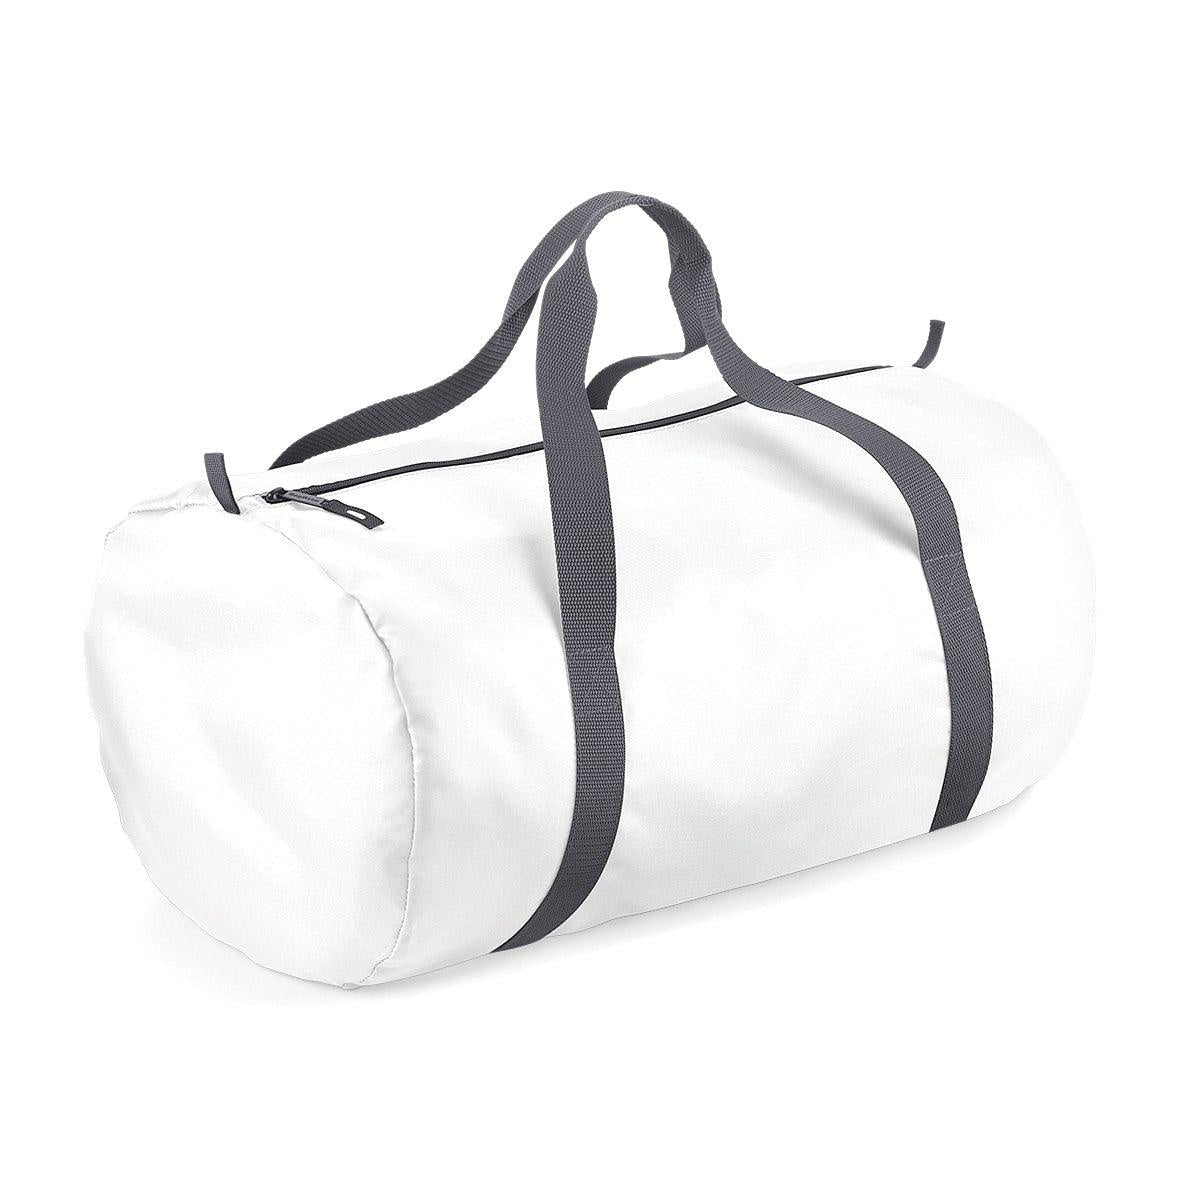 Packaway barrel bag BG150 - Trustsport